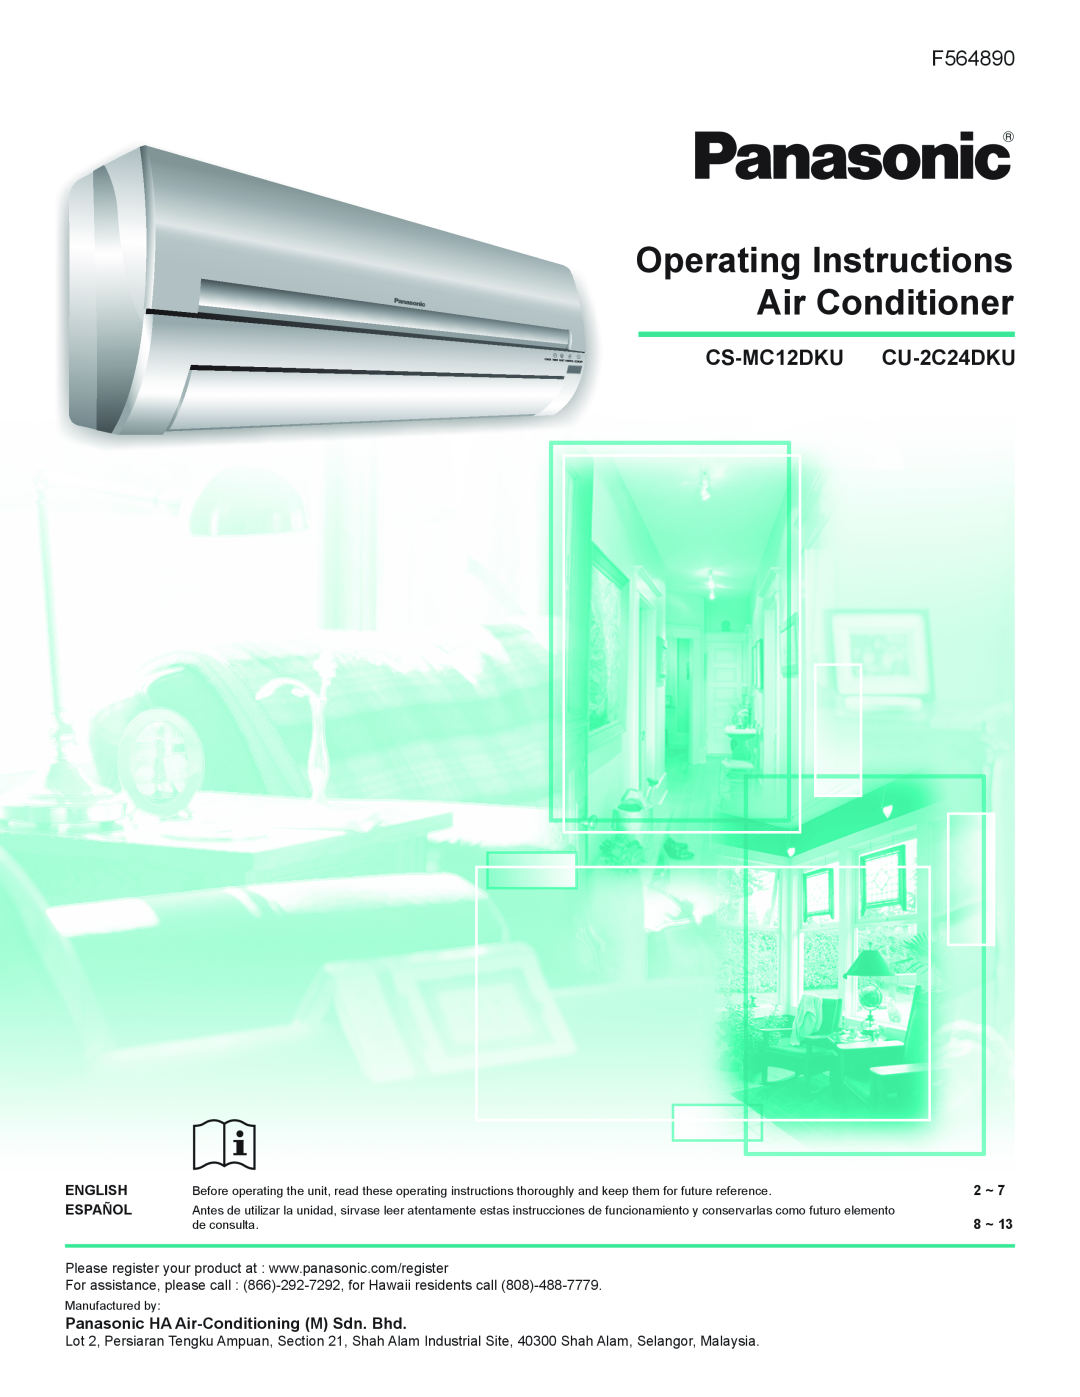 Panasonic manual Operating Instructions Air Conditioner, F564890, CS-MC12DKU CU-2C24DKU, English, Español 